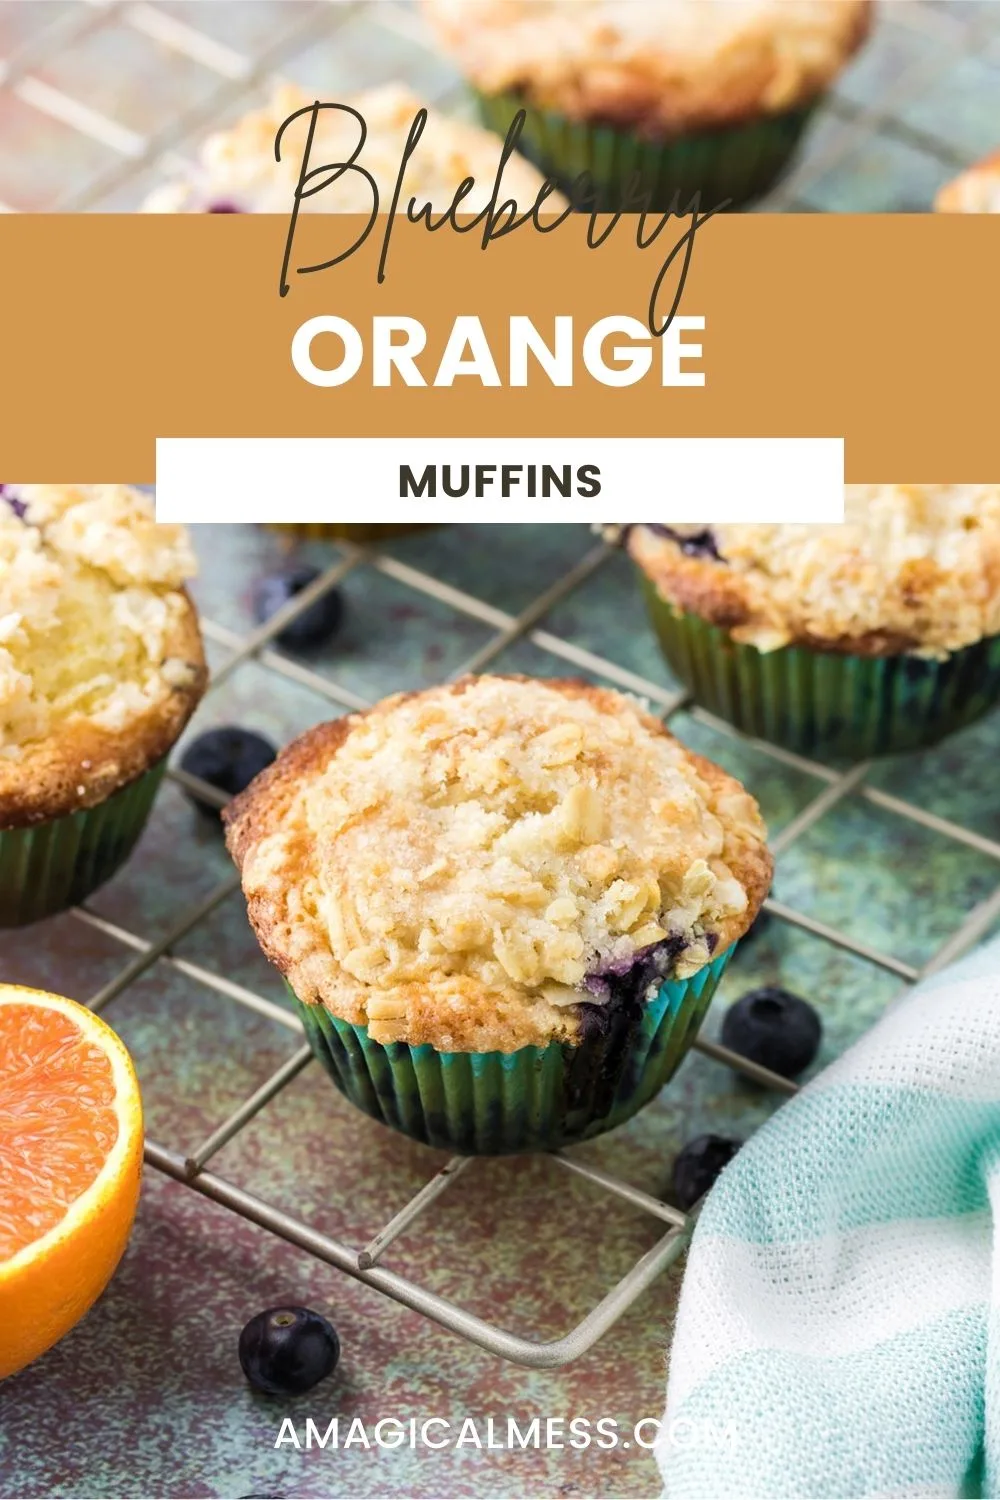 Orange blueberry muffins on a rack.